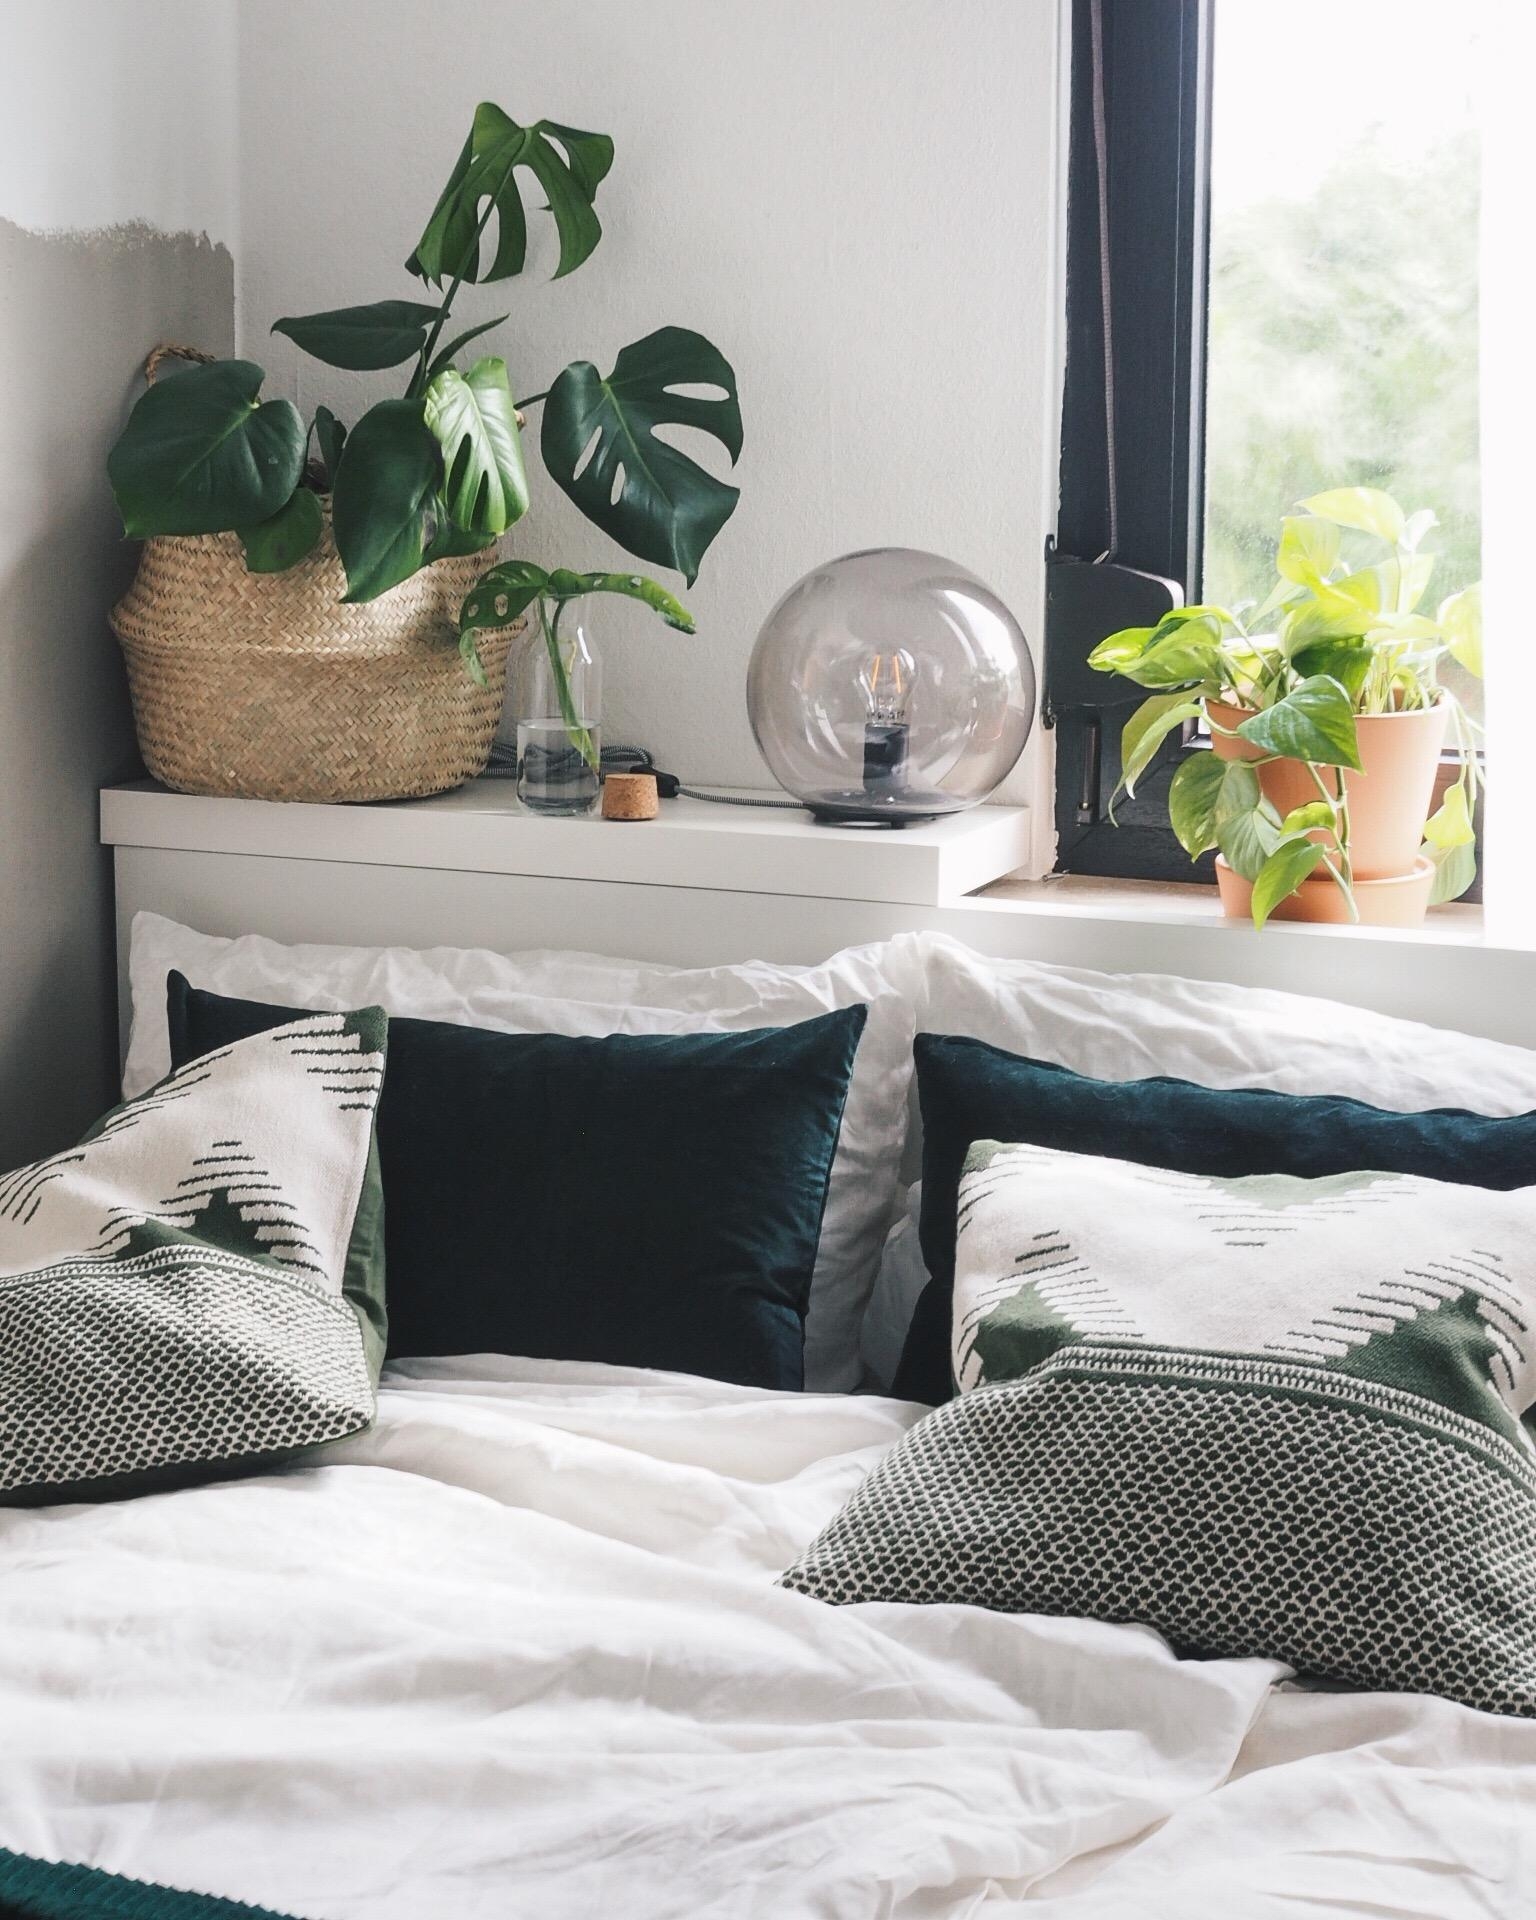 Details
#couchmagazin #mynordicroom #greenlove #bedroom #schlafzimmer